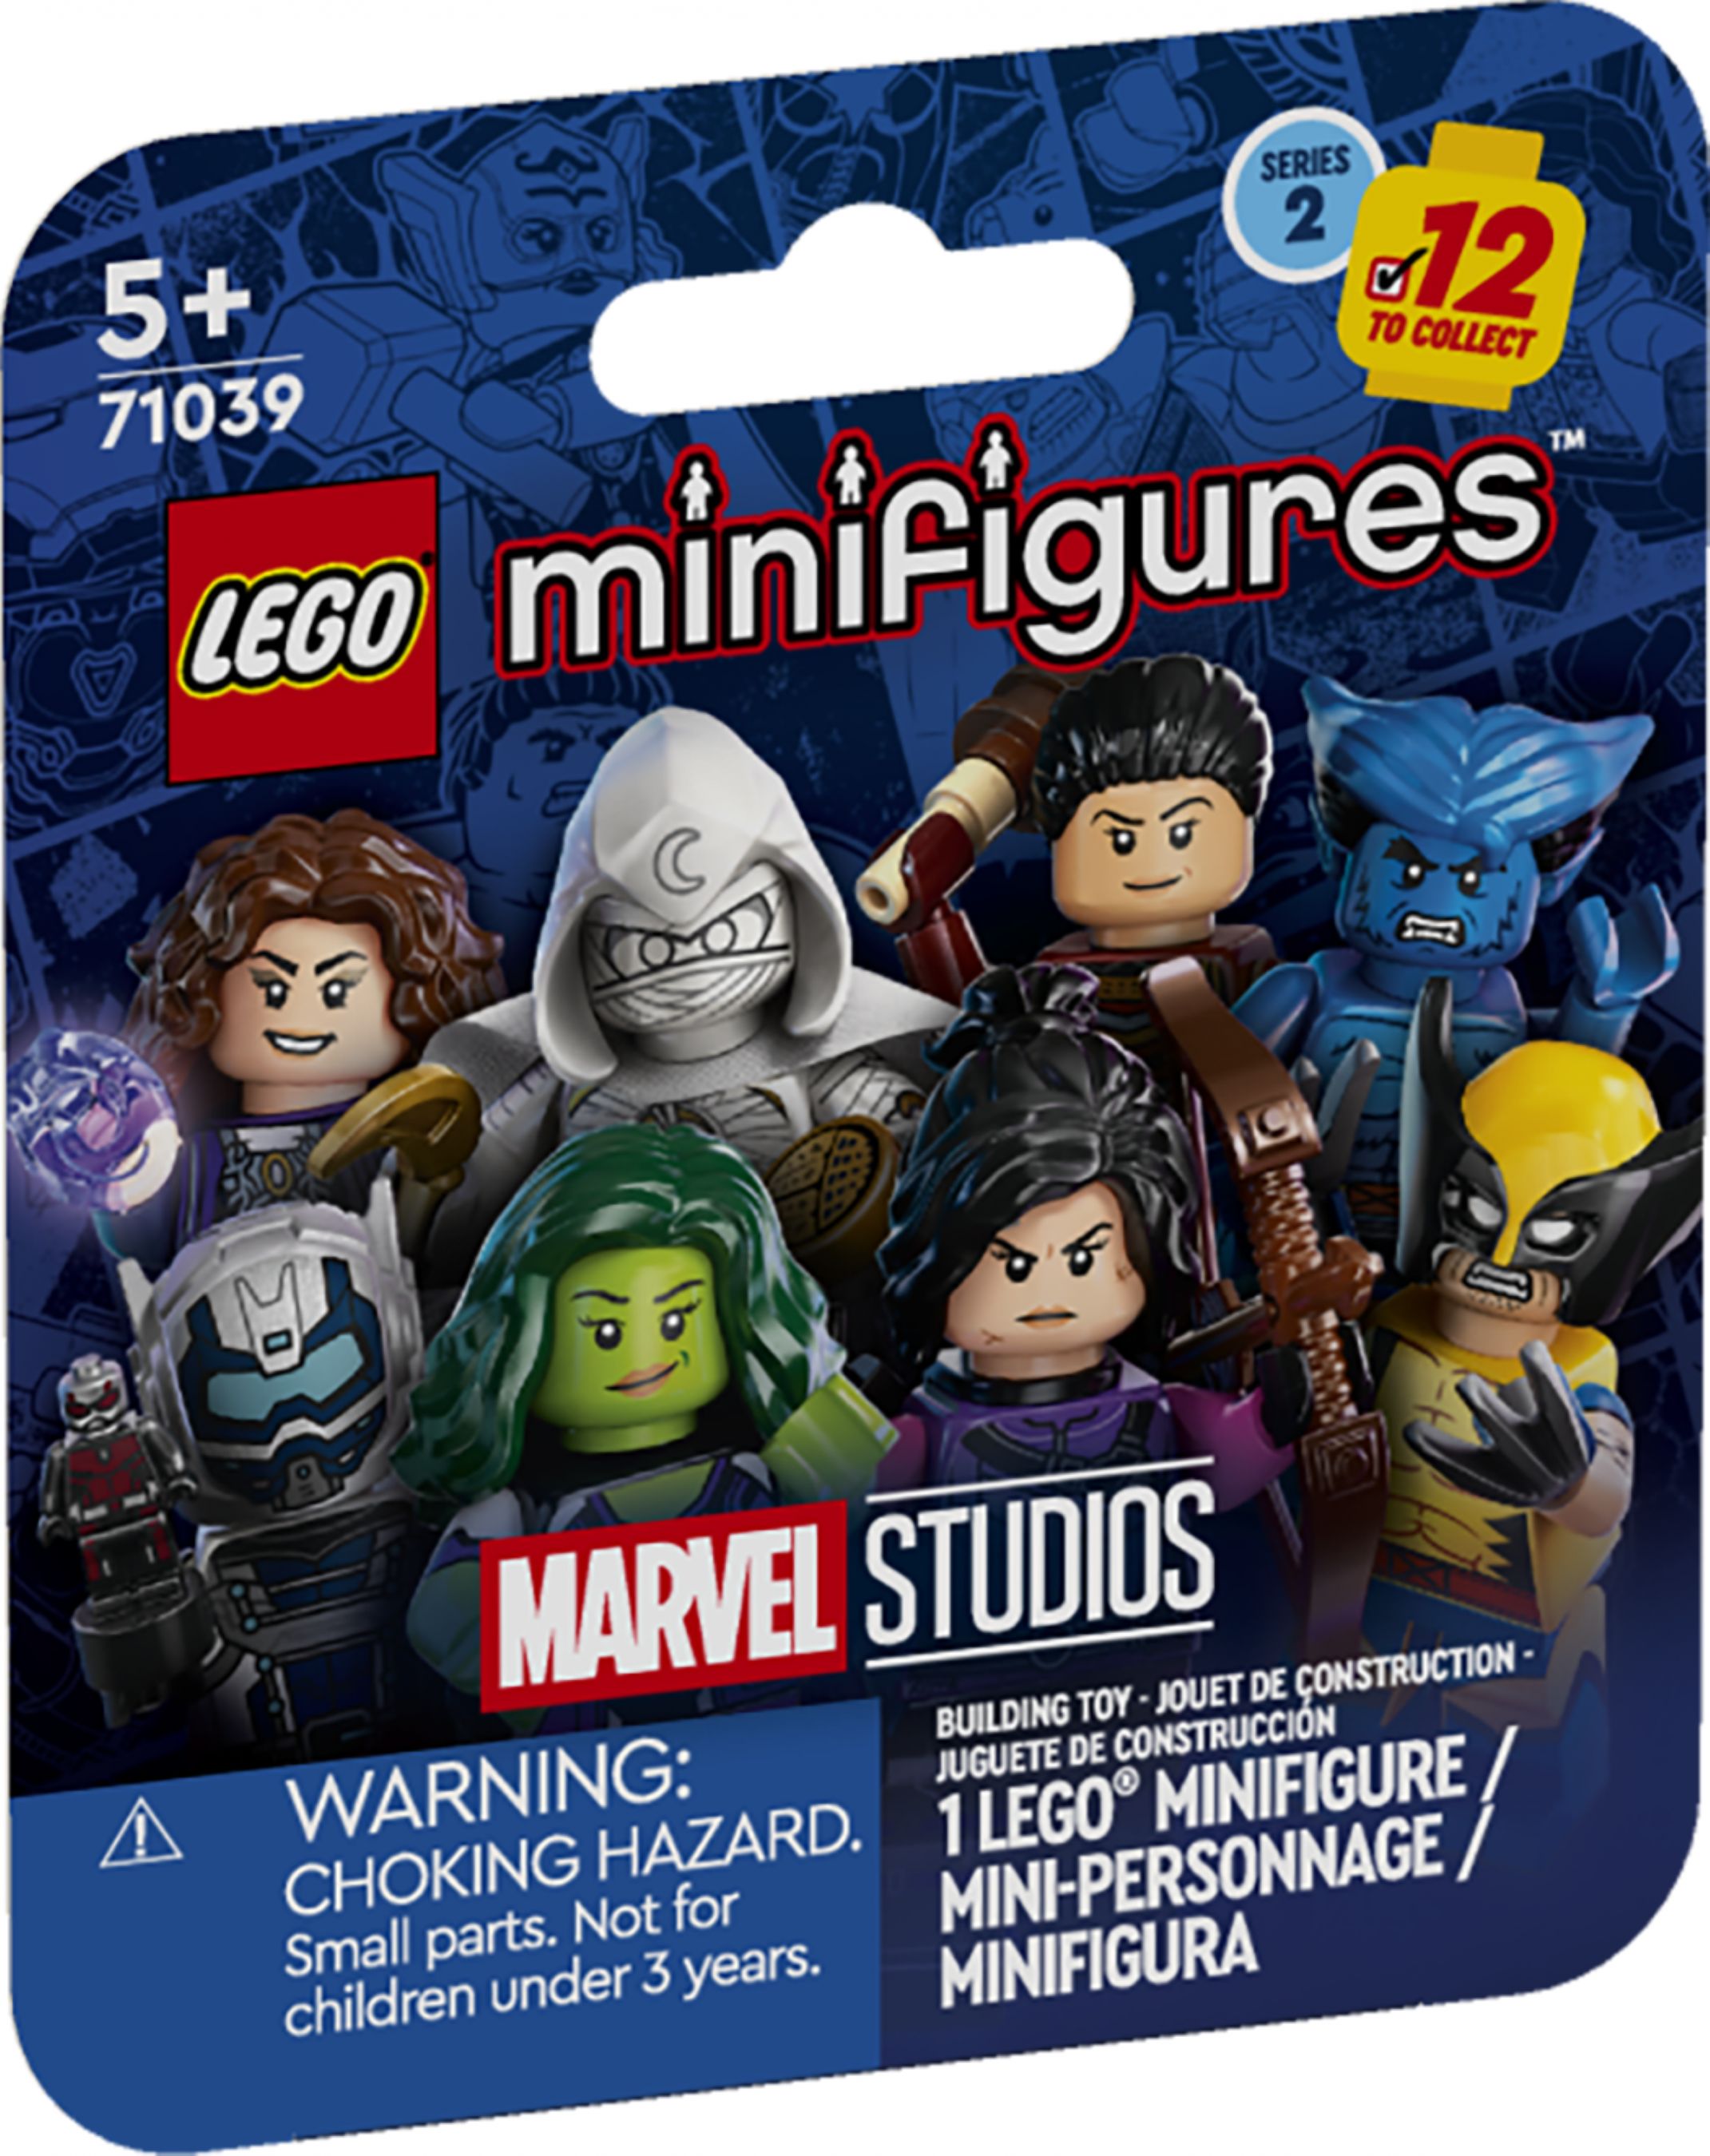 LEGO Collectable Minifigures 71039 Marvel Minifiguren Serie 2 - 24er Display Box LEGO_71039_alt1.jpg